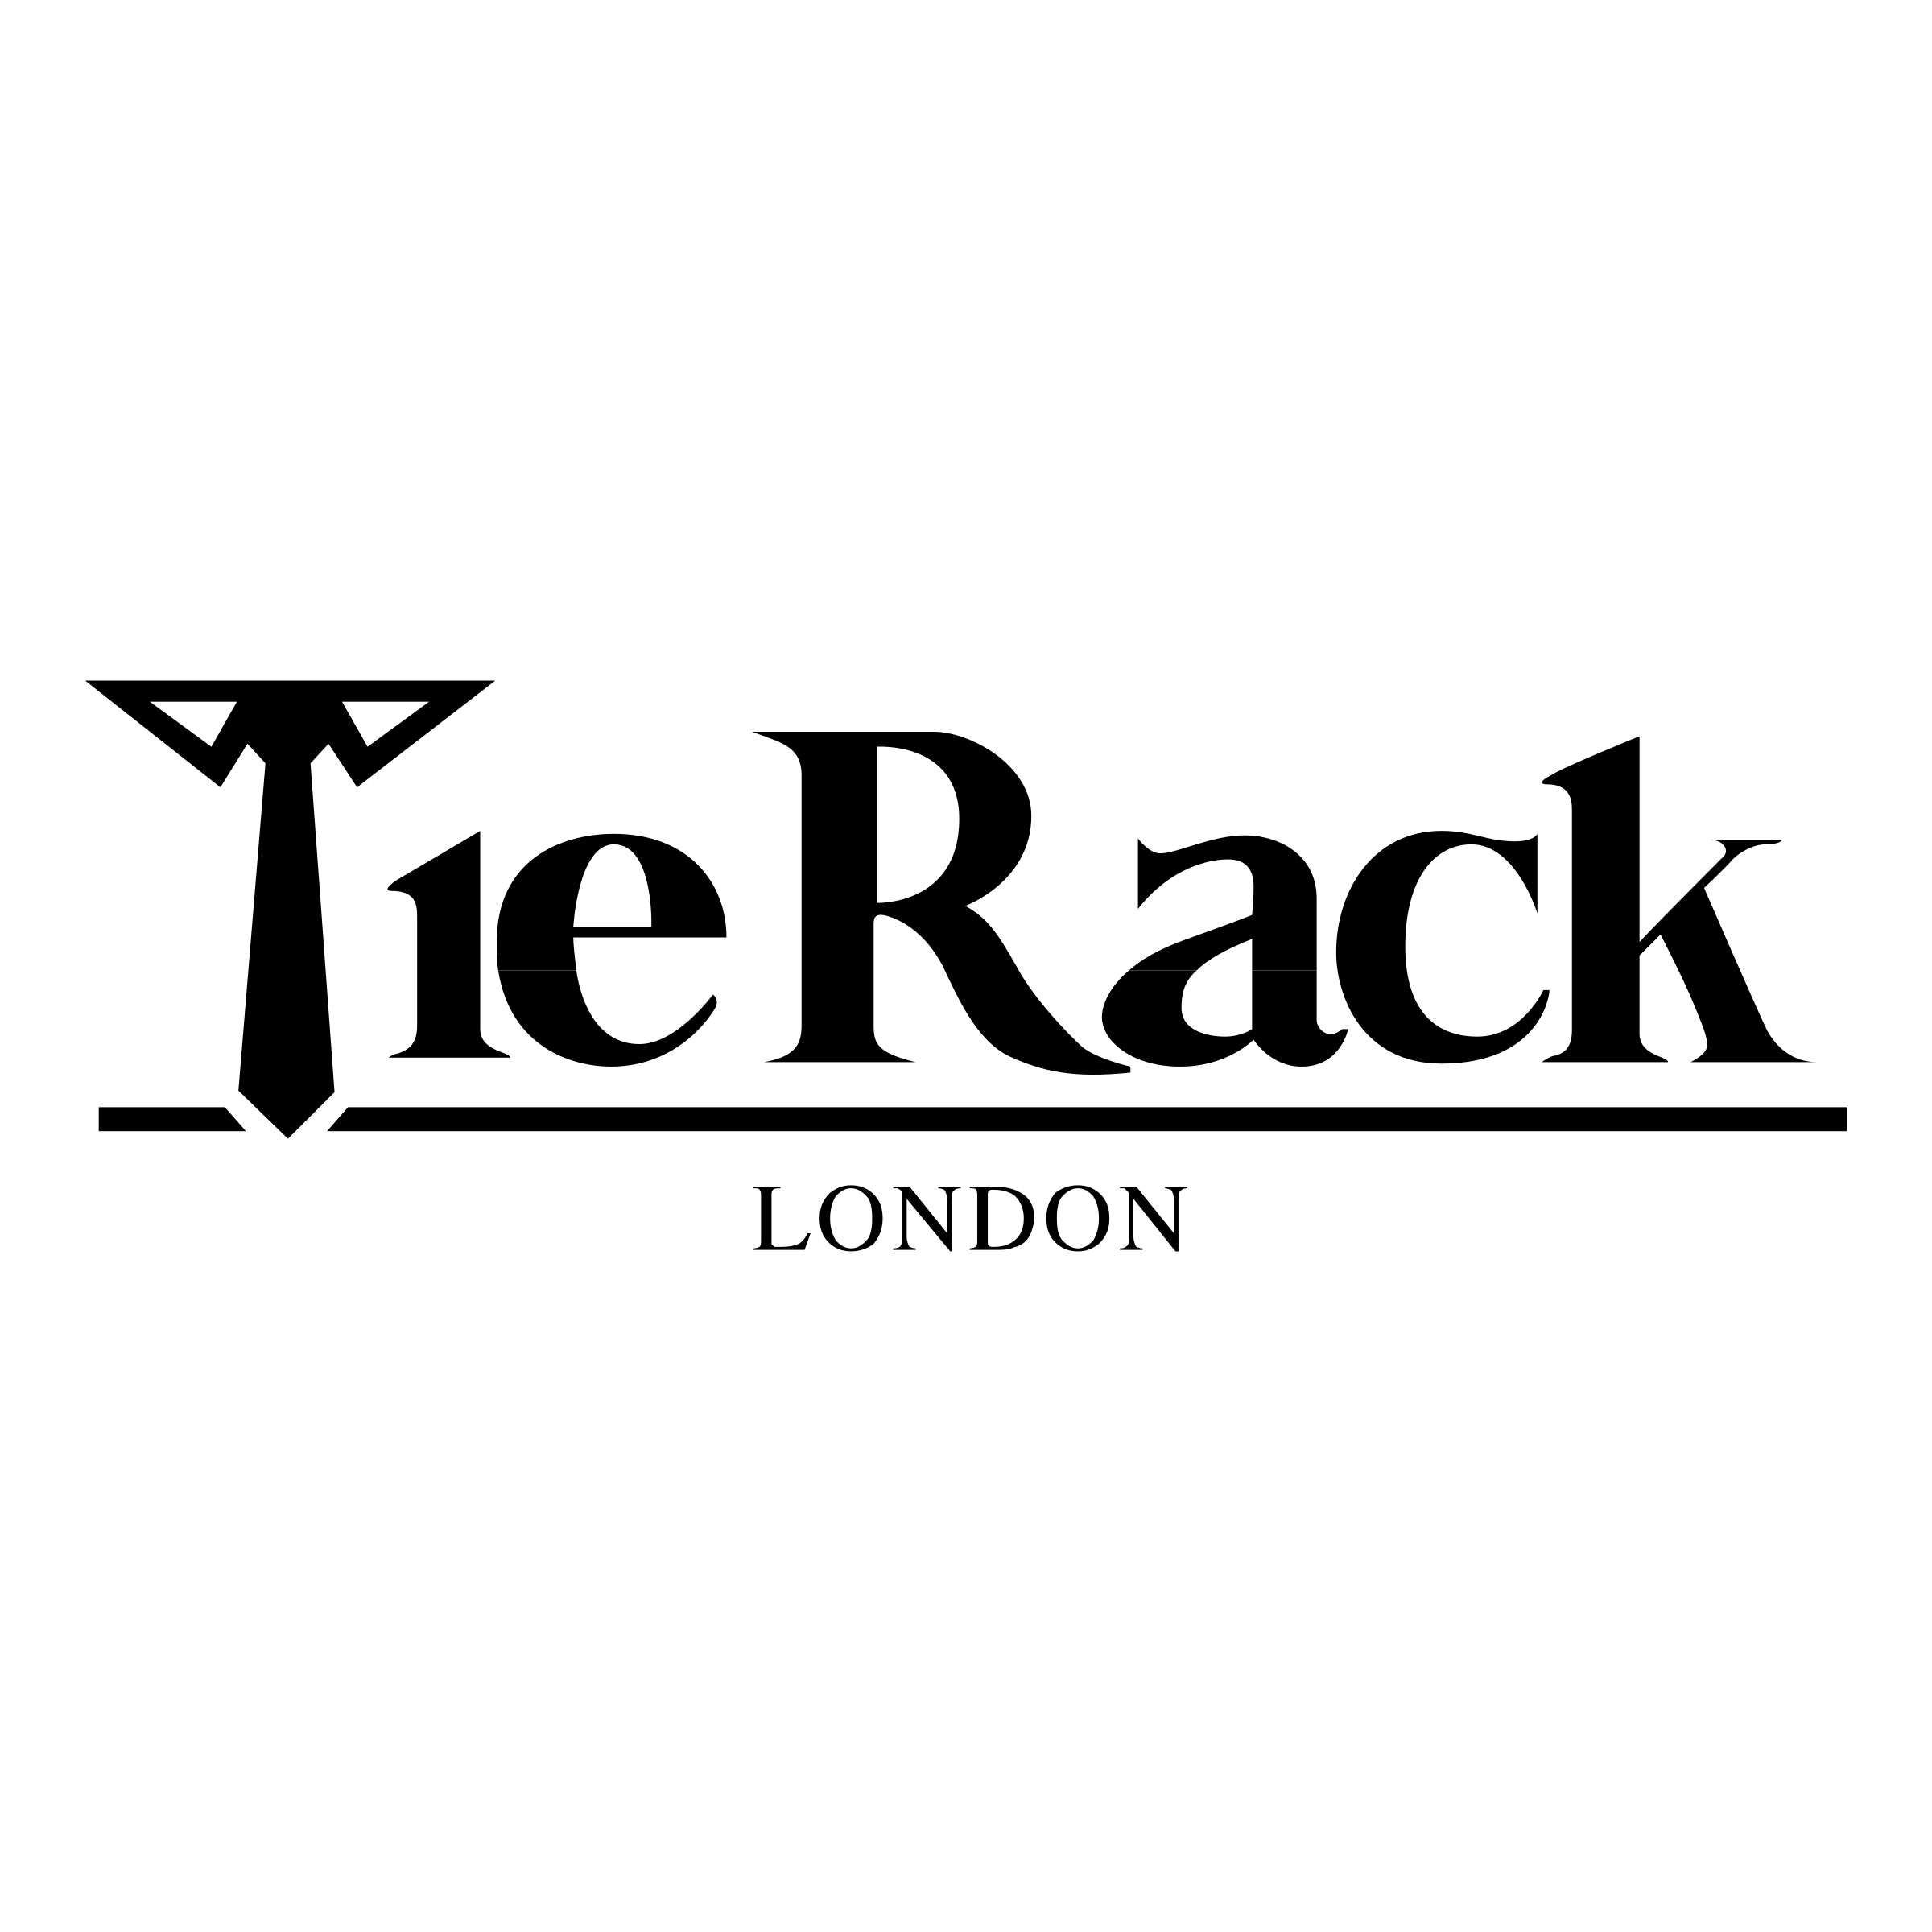 Rack Logo - Tie Rack Logo PNG Transparent & SVG Vector - Freebie Supply